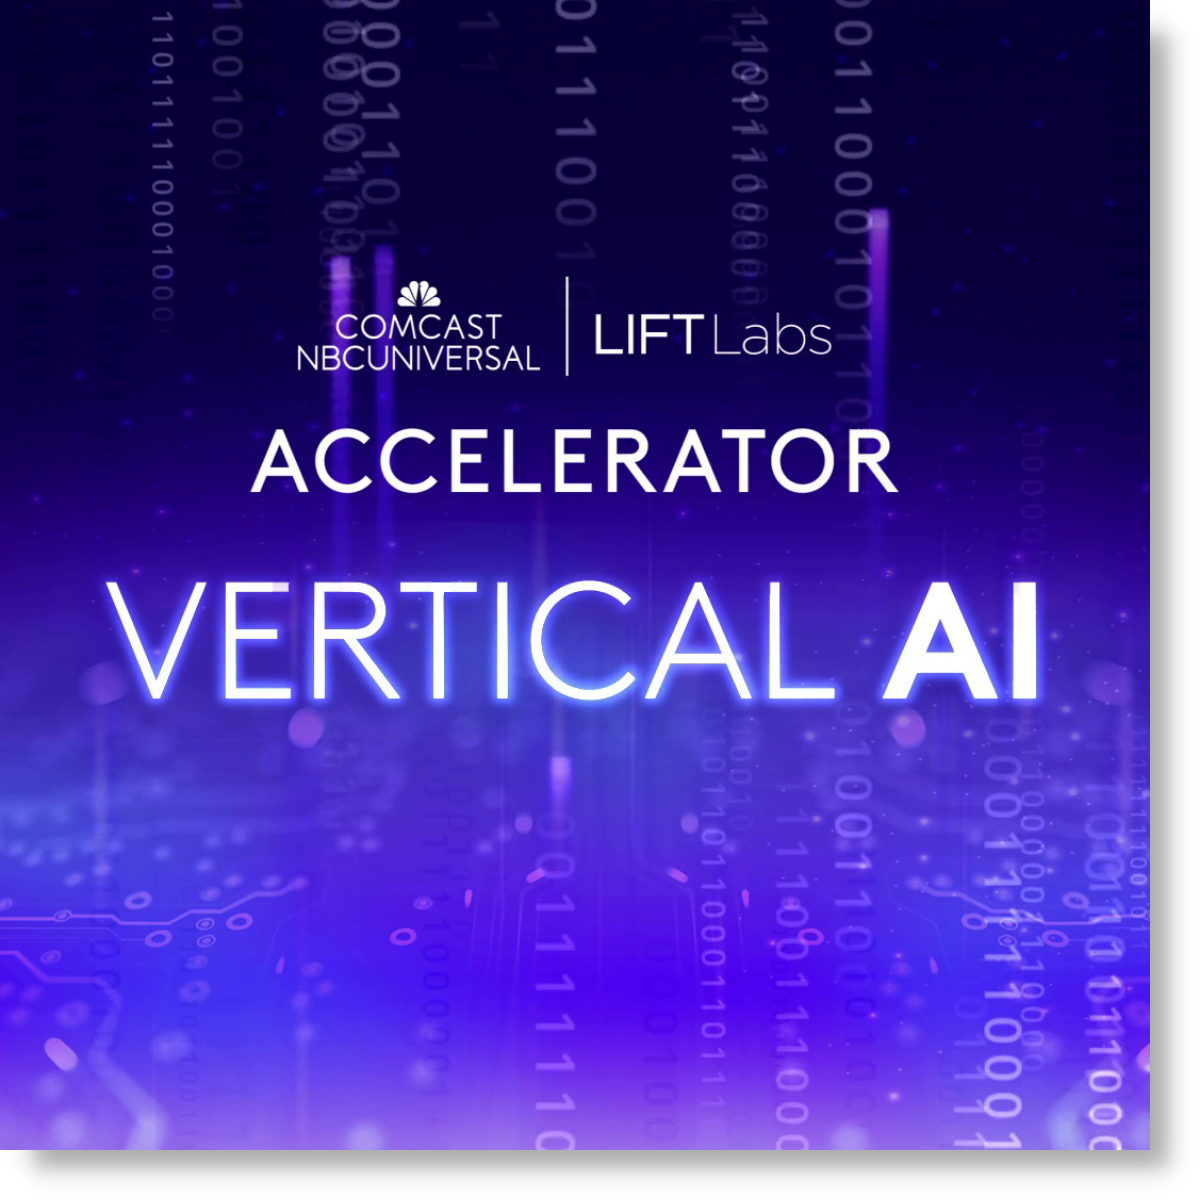 Comcast NBC Universal LIFT Labs Accelerator Vertical AI